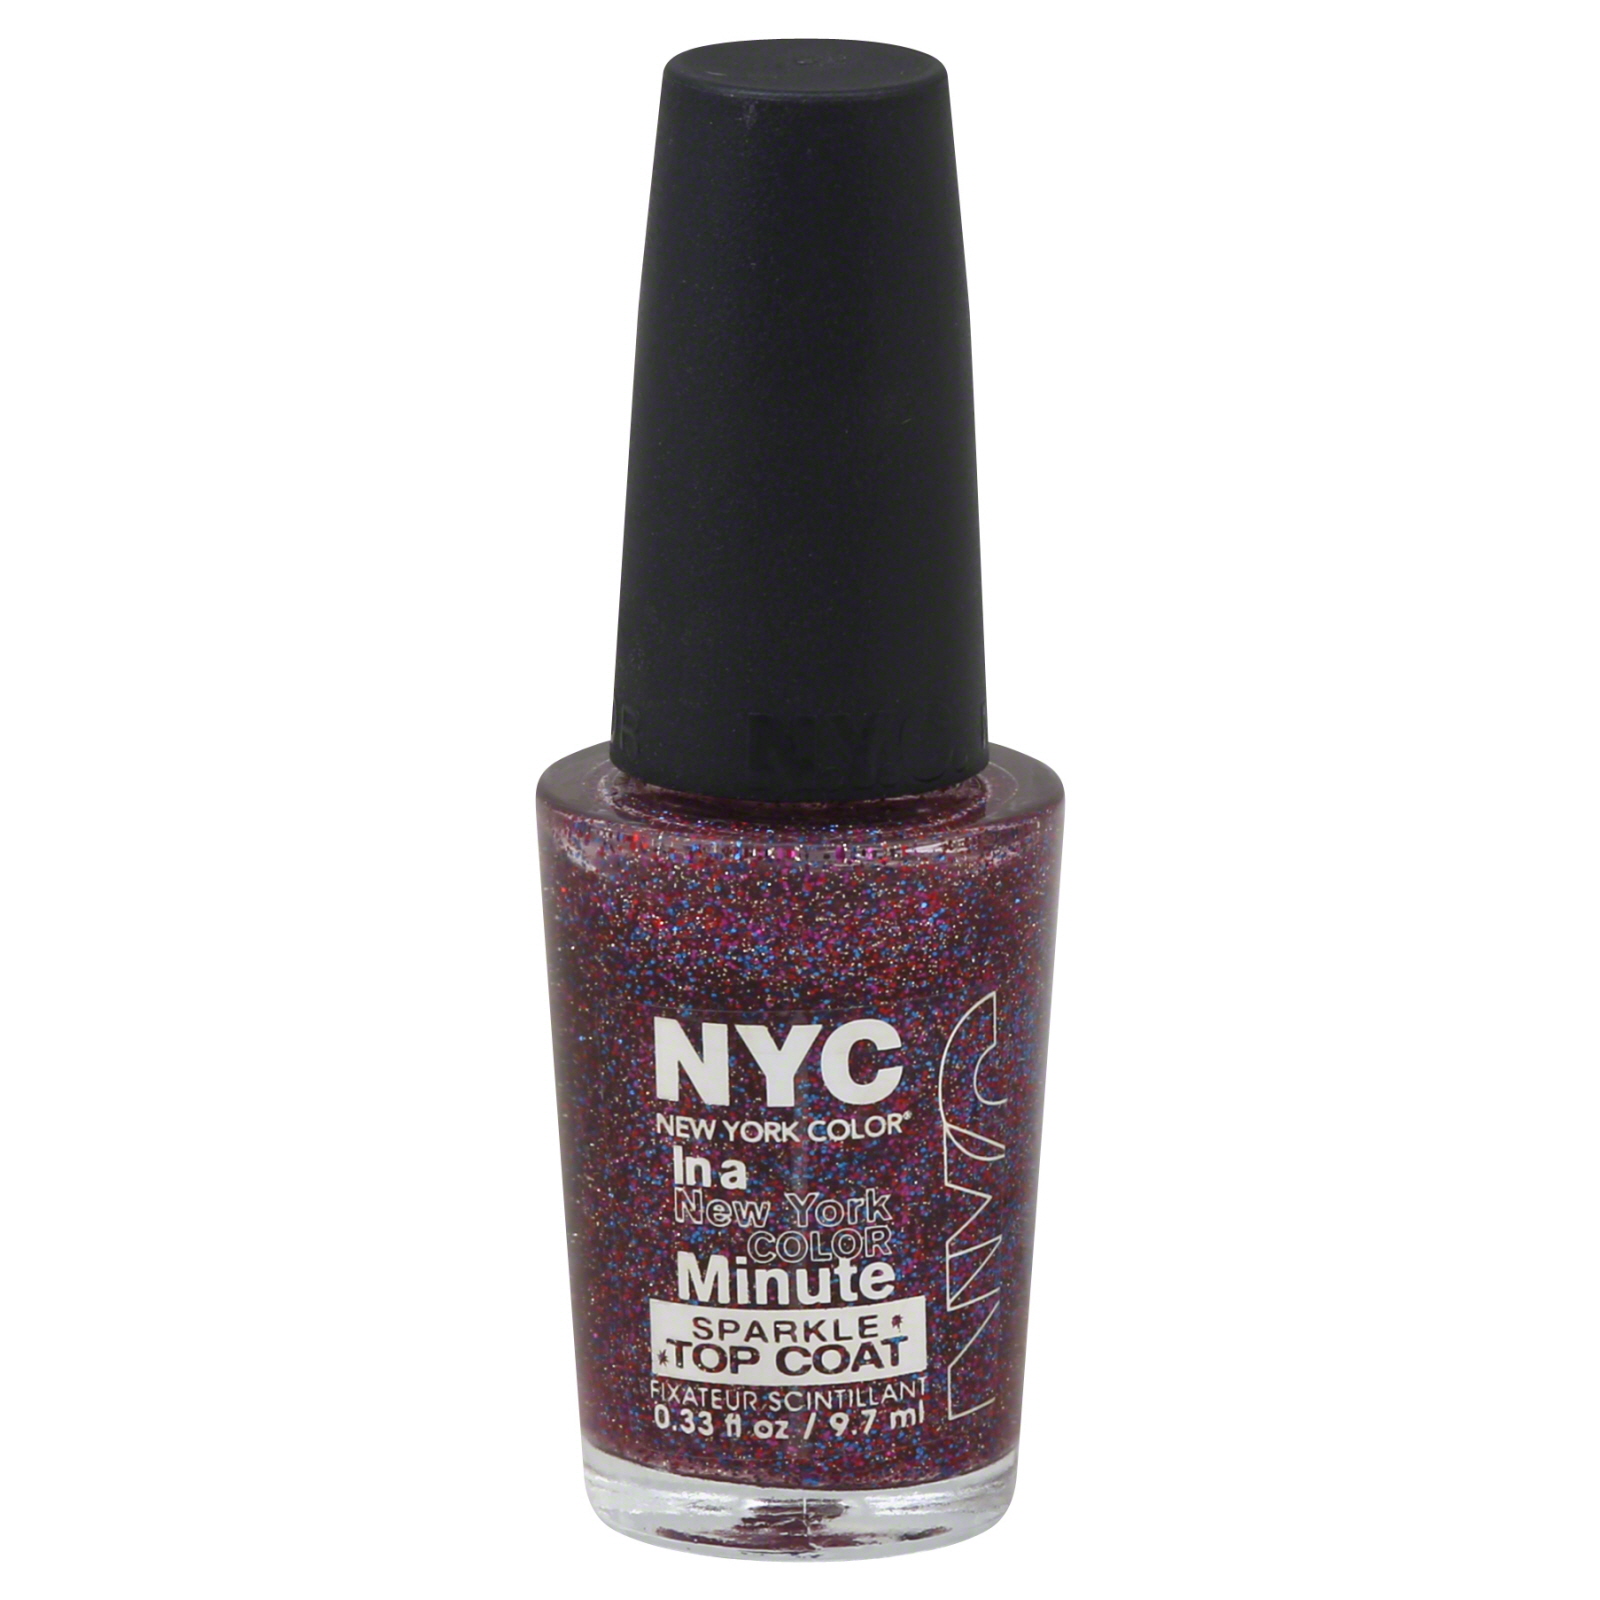 New York Color Top Coat Sparkle Big City Dazzle 0.33 fl oz